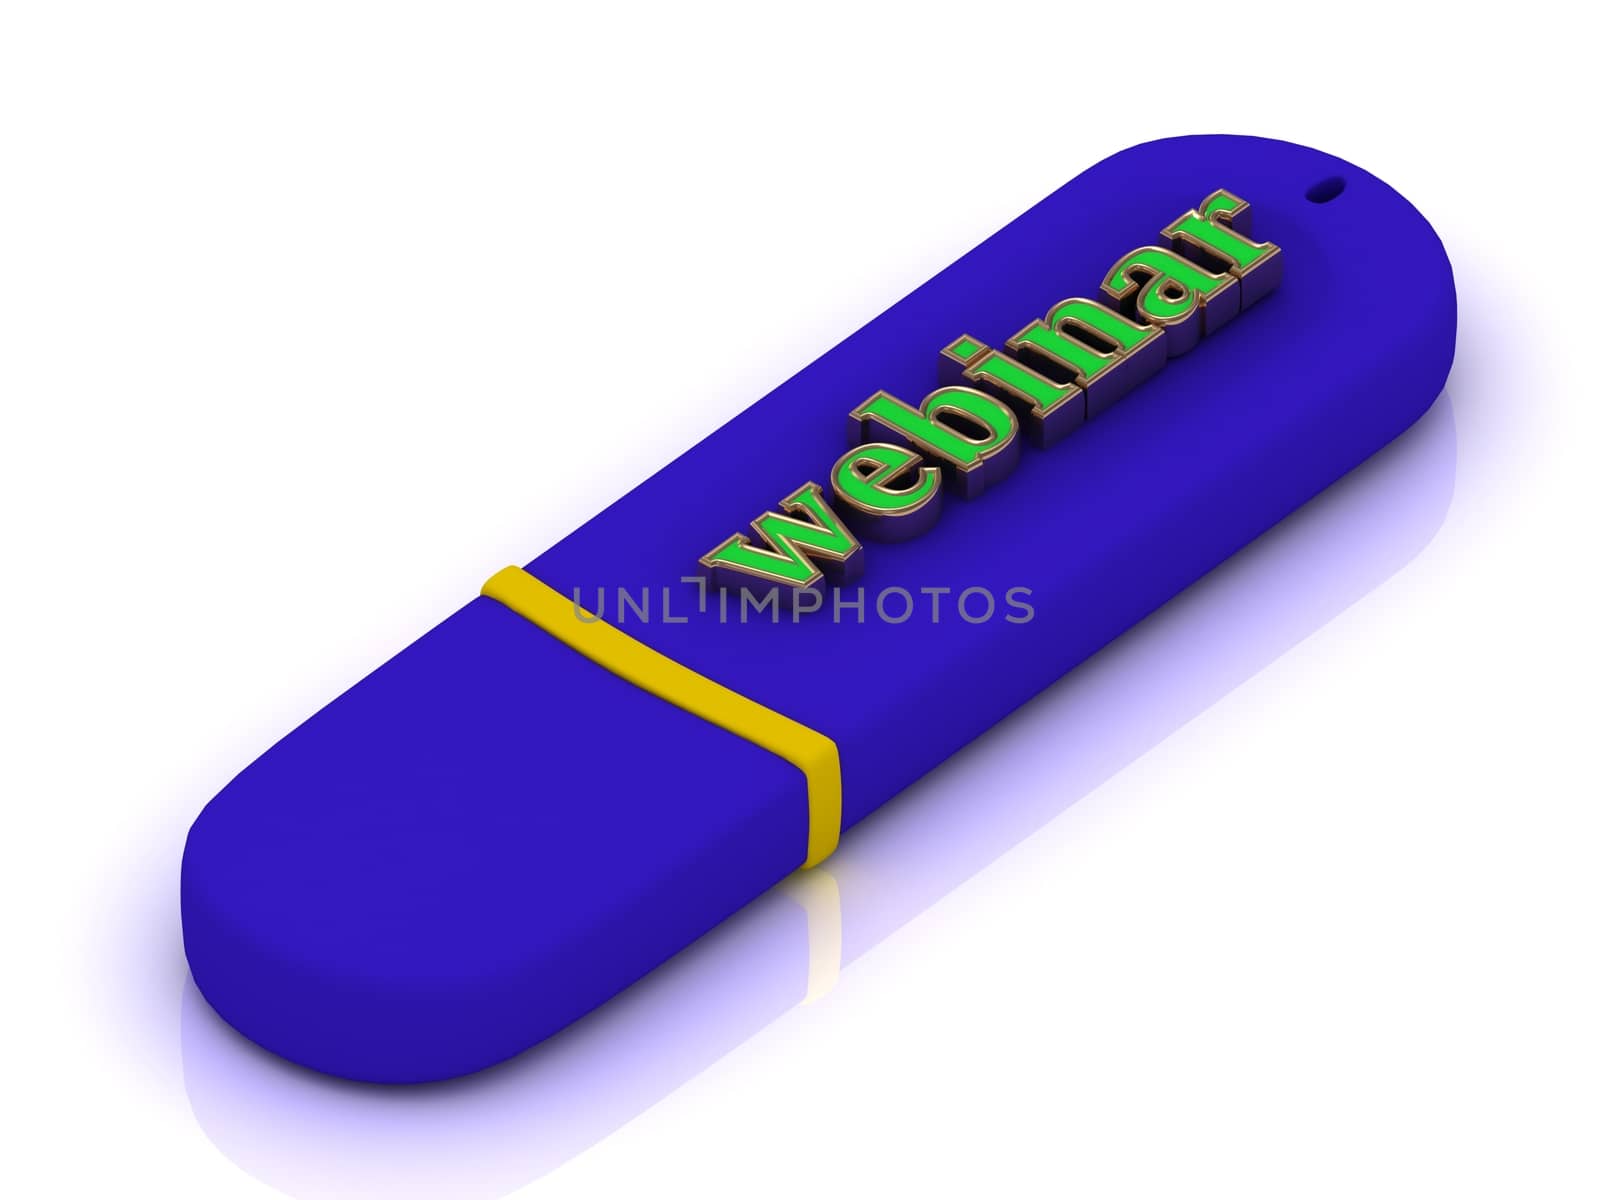 Webinar - inscription bright volume letter on blue USB flash drive on white background